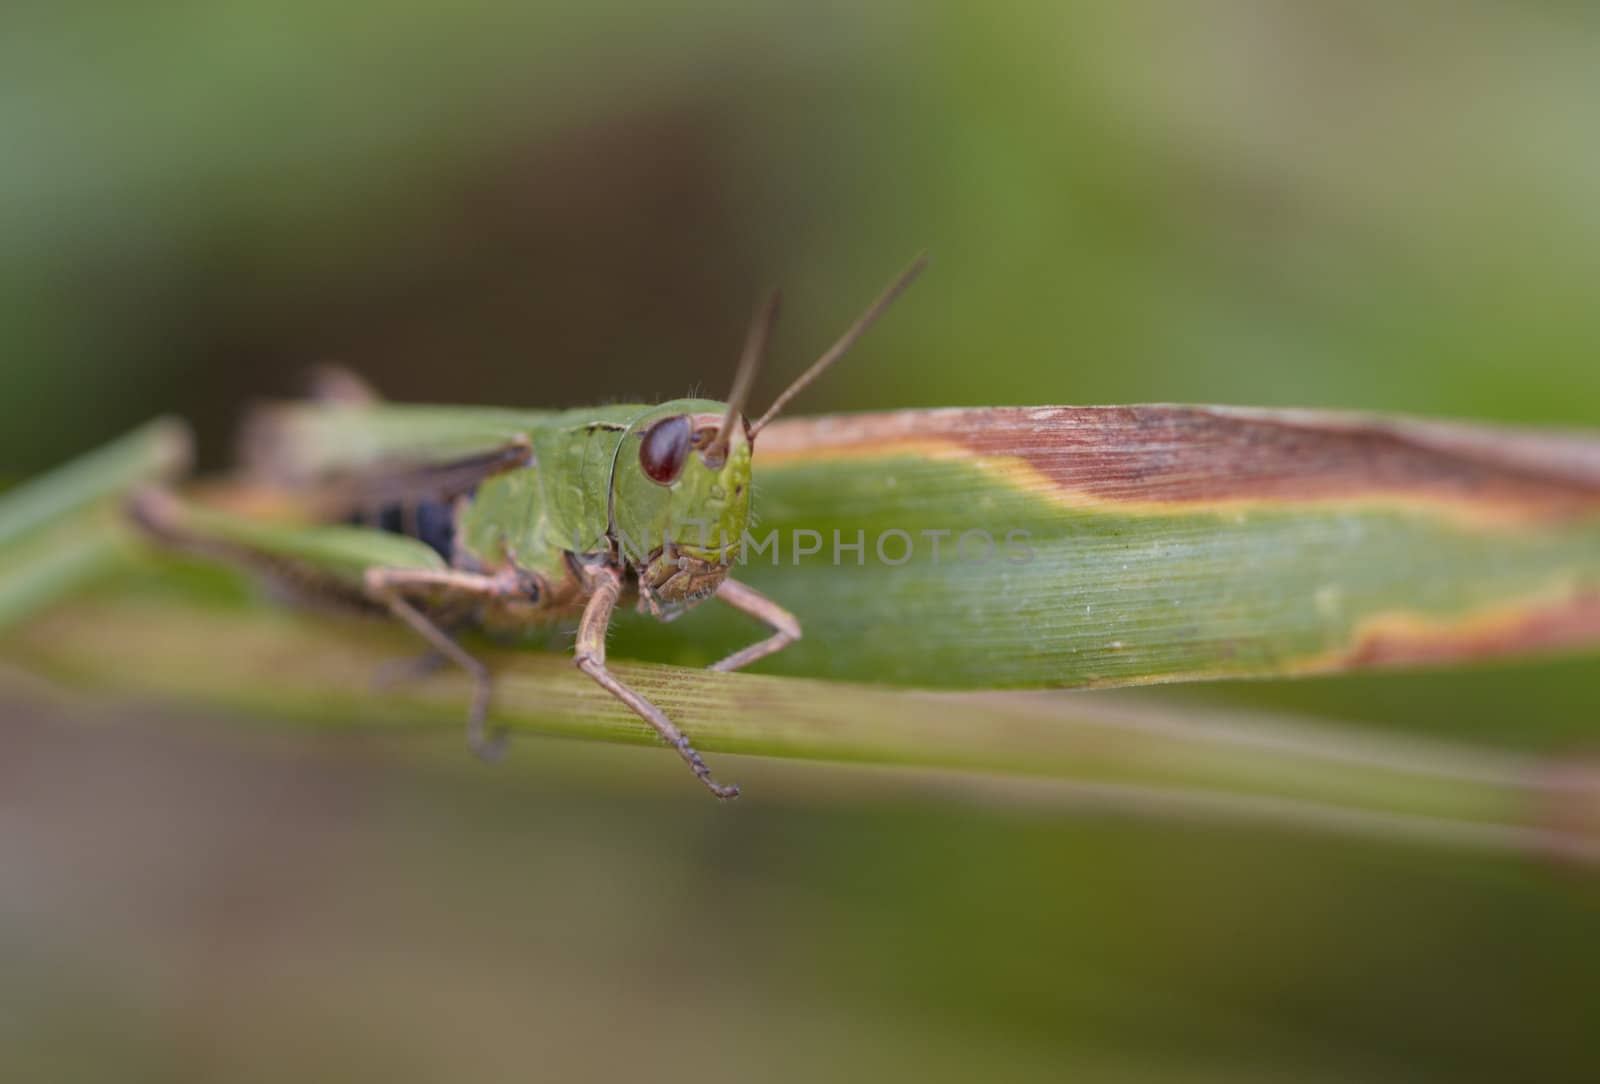 Grasshopper on the grass by Nikonas